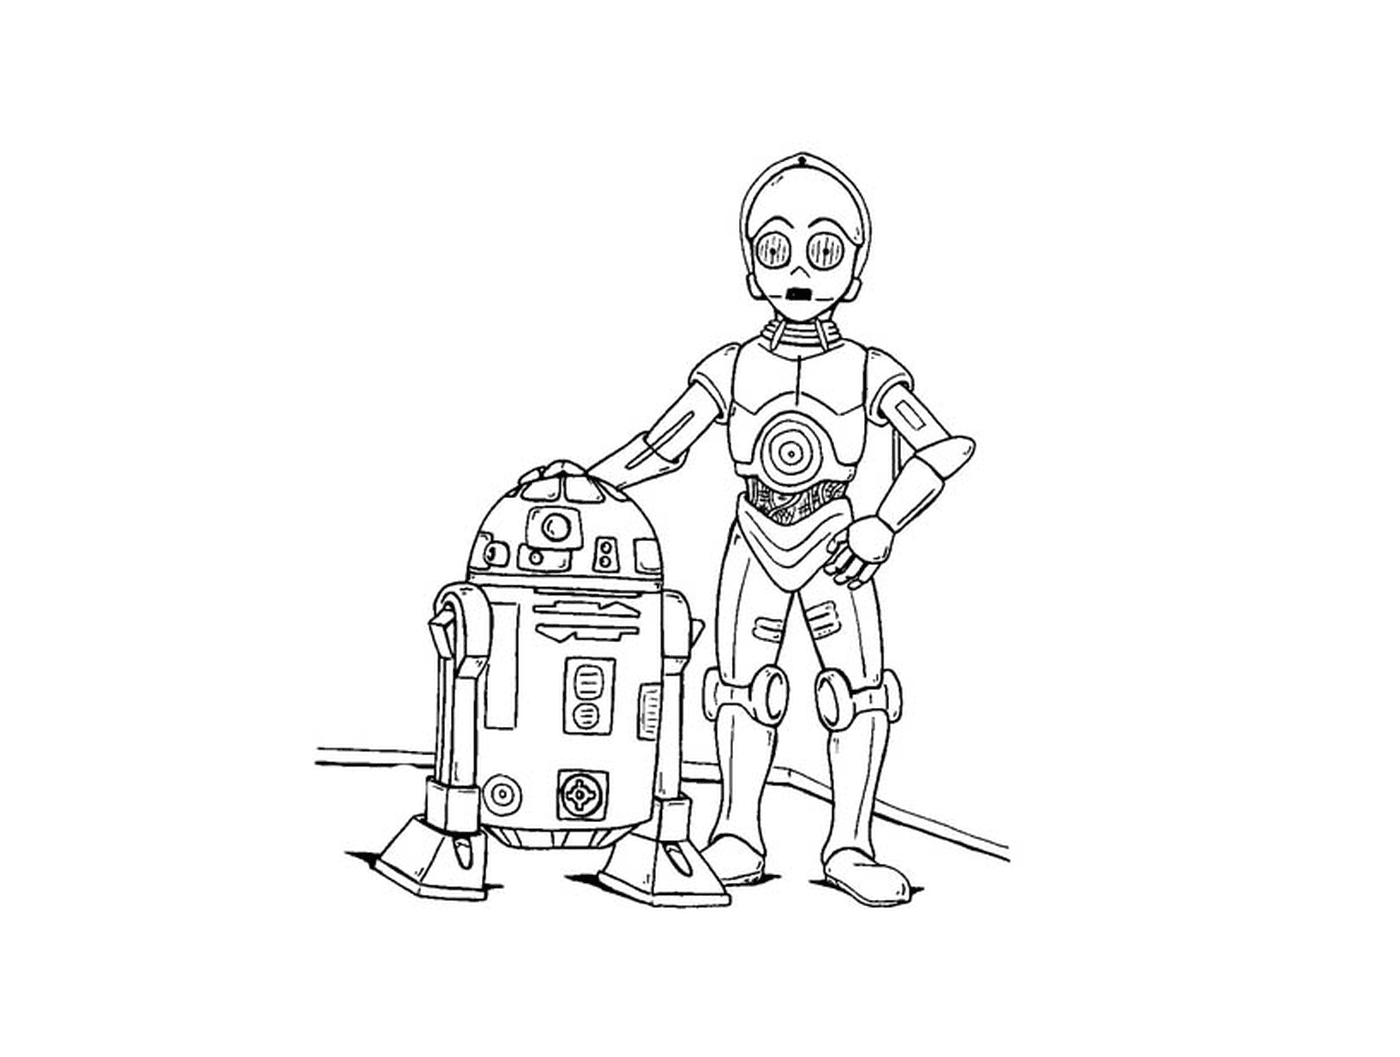  R2-D2 e C-3PO famosos 